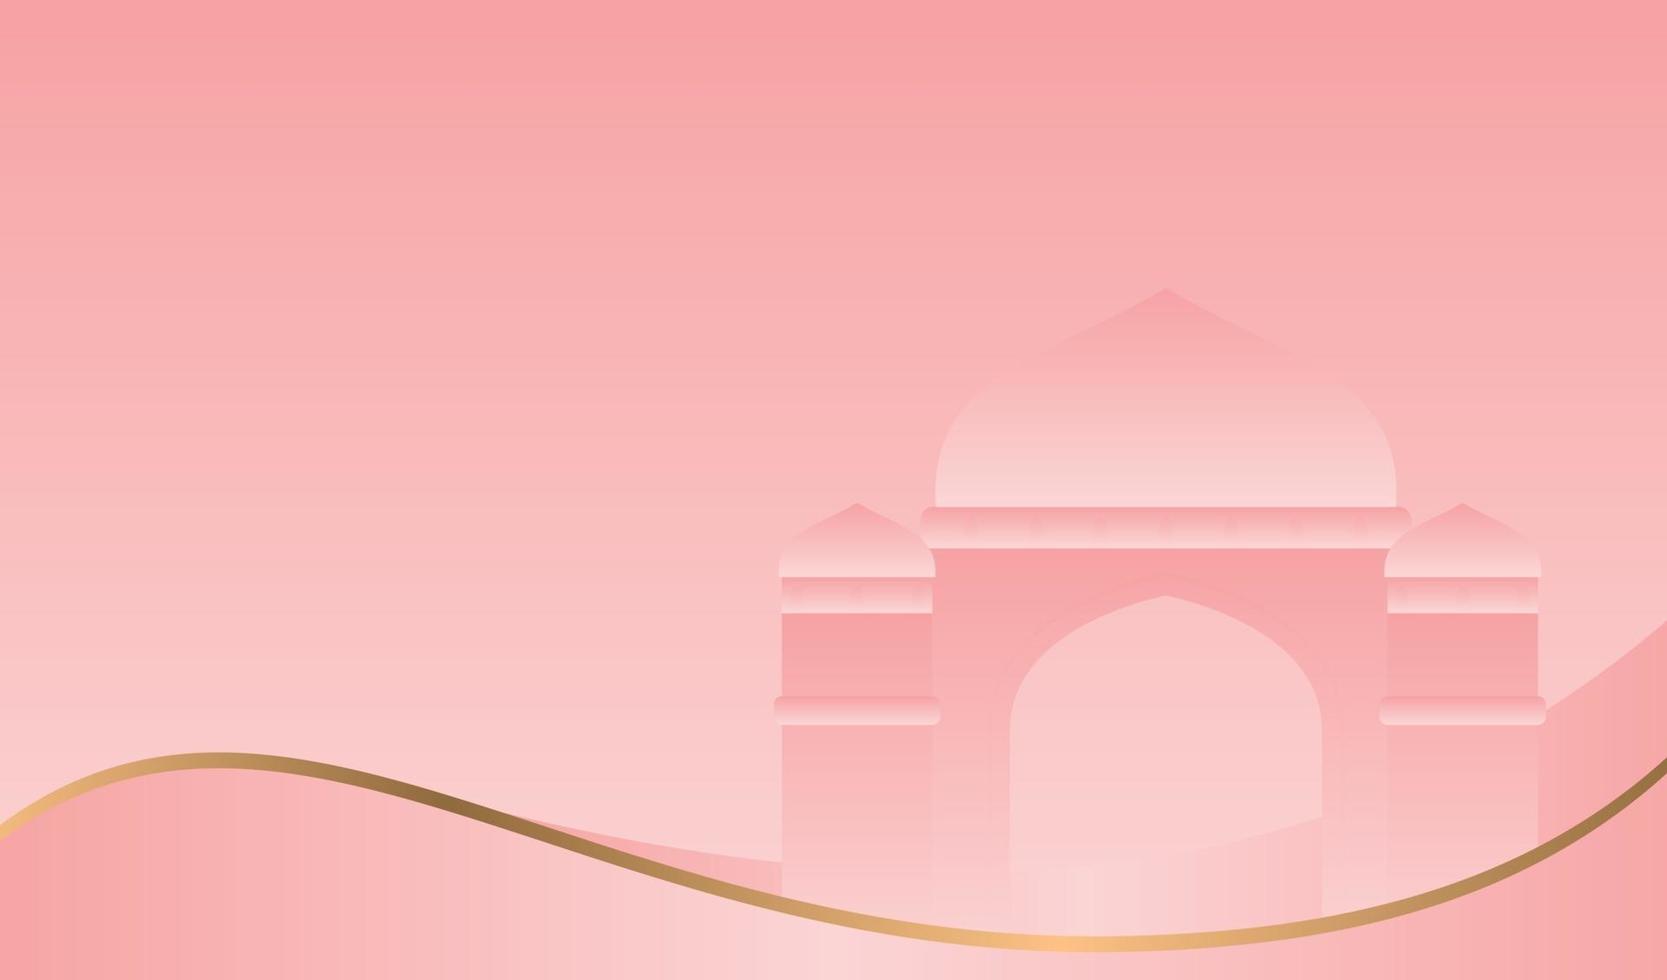 Islamic Background design for Ramadan Kareem and Eid Mubarak or Eid Al Adha vector